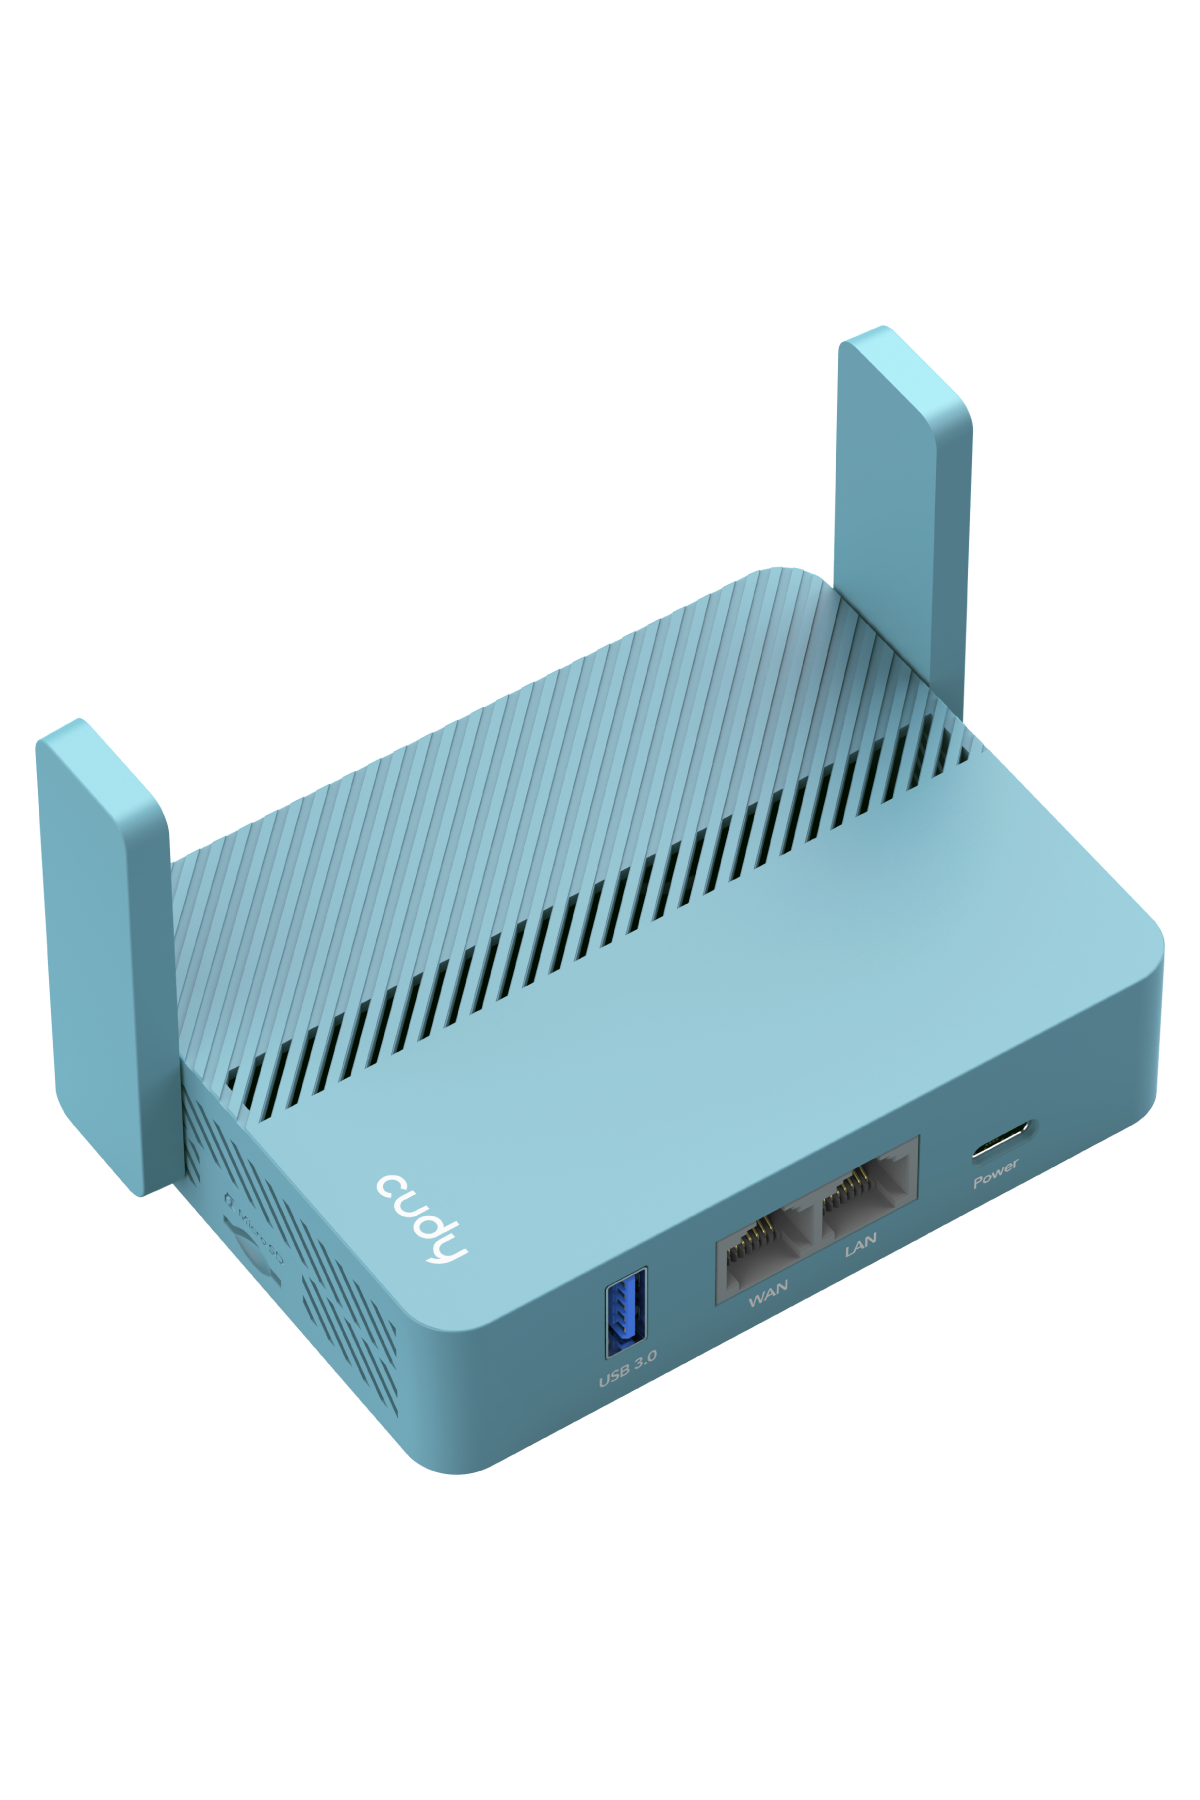 AC1200 Gigabit Wi-Fi Travel Router, Model: TR1300